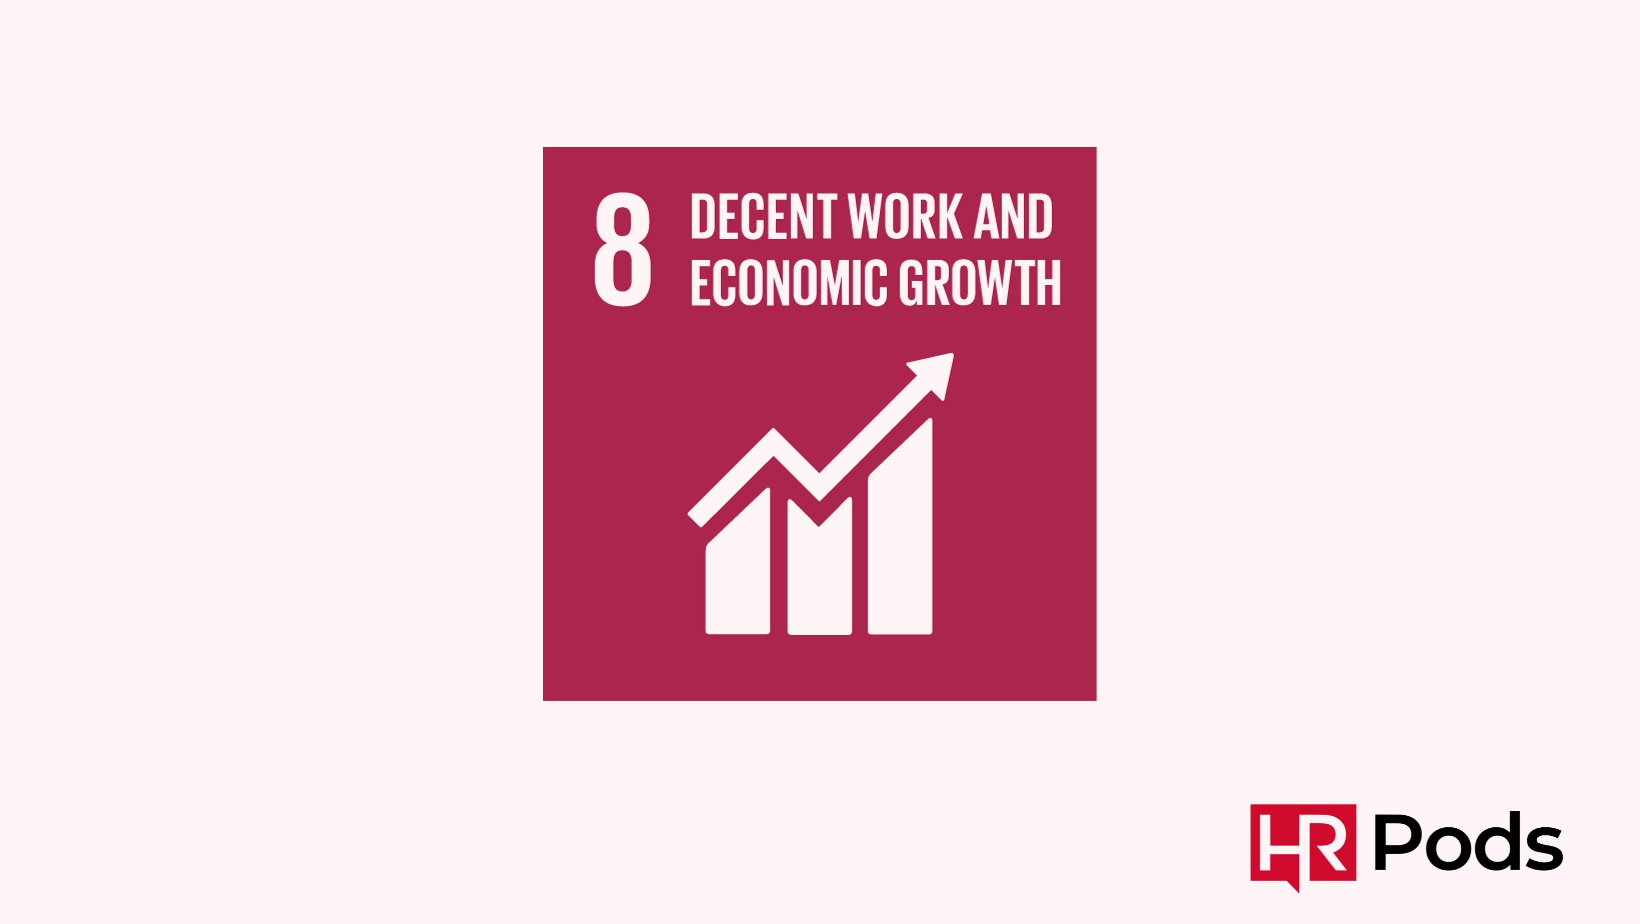 17 Tujuan SDGs HRPods